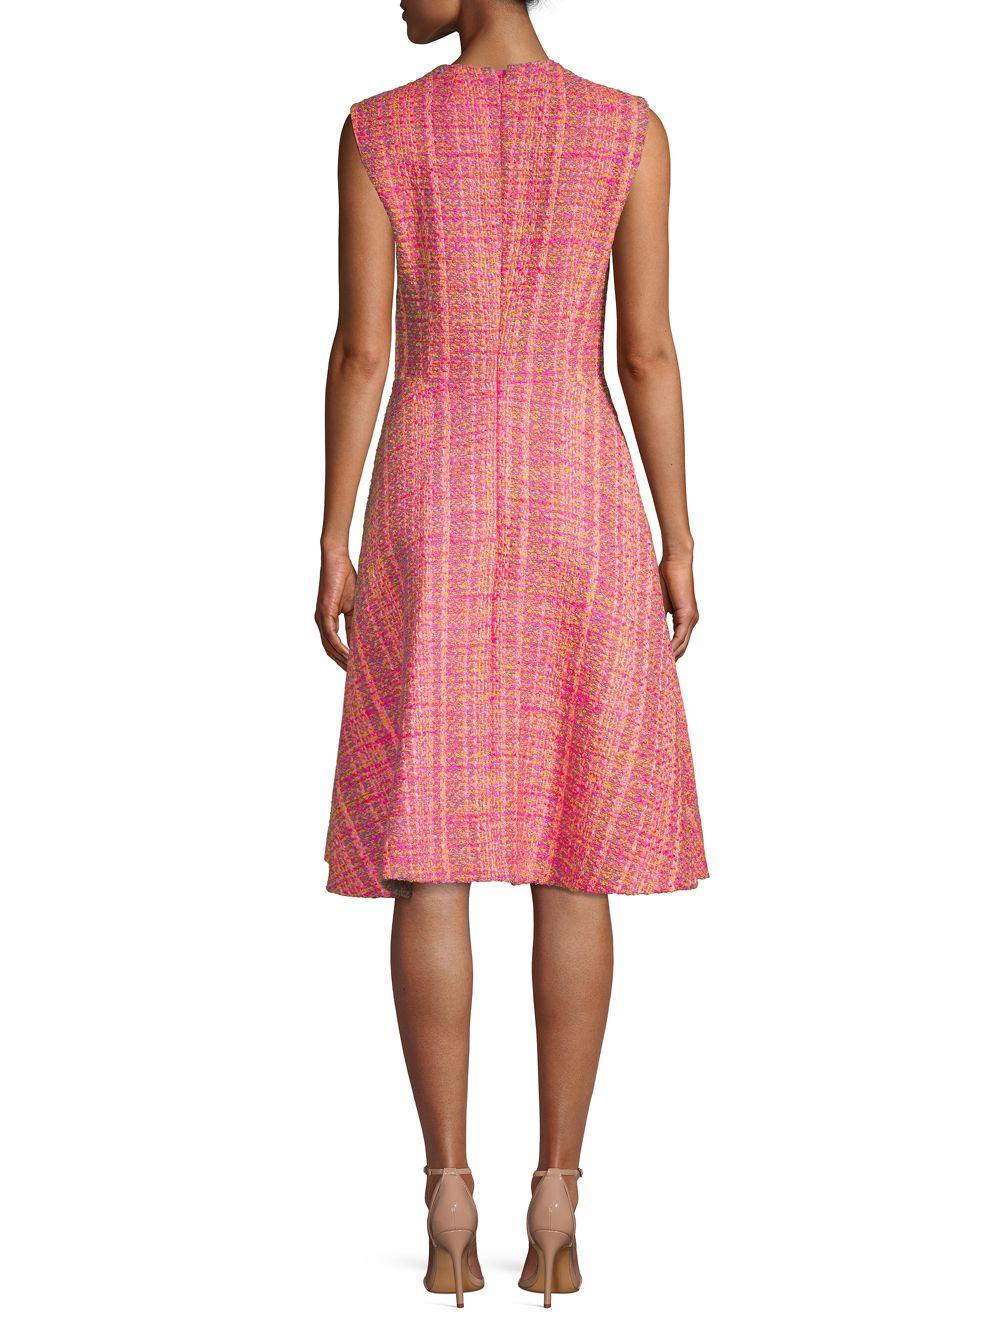 Prada Tweed Boucle Sleeveless A-line Dress in Pink Pattern (Pink) - Lyst